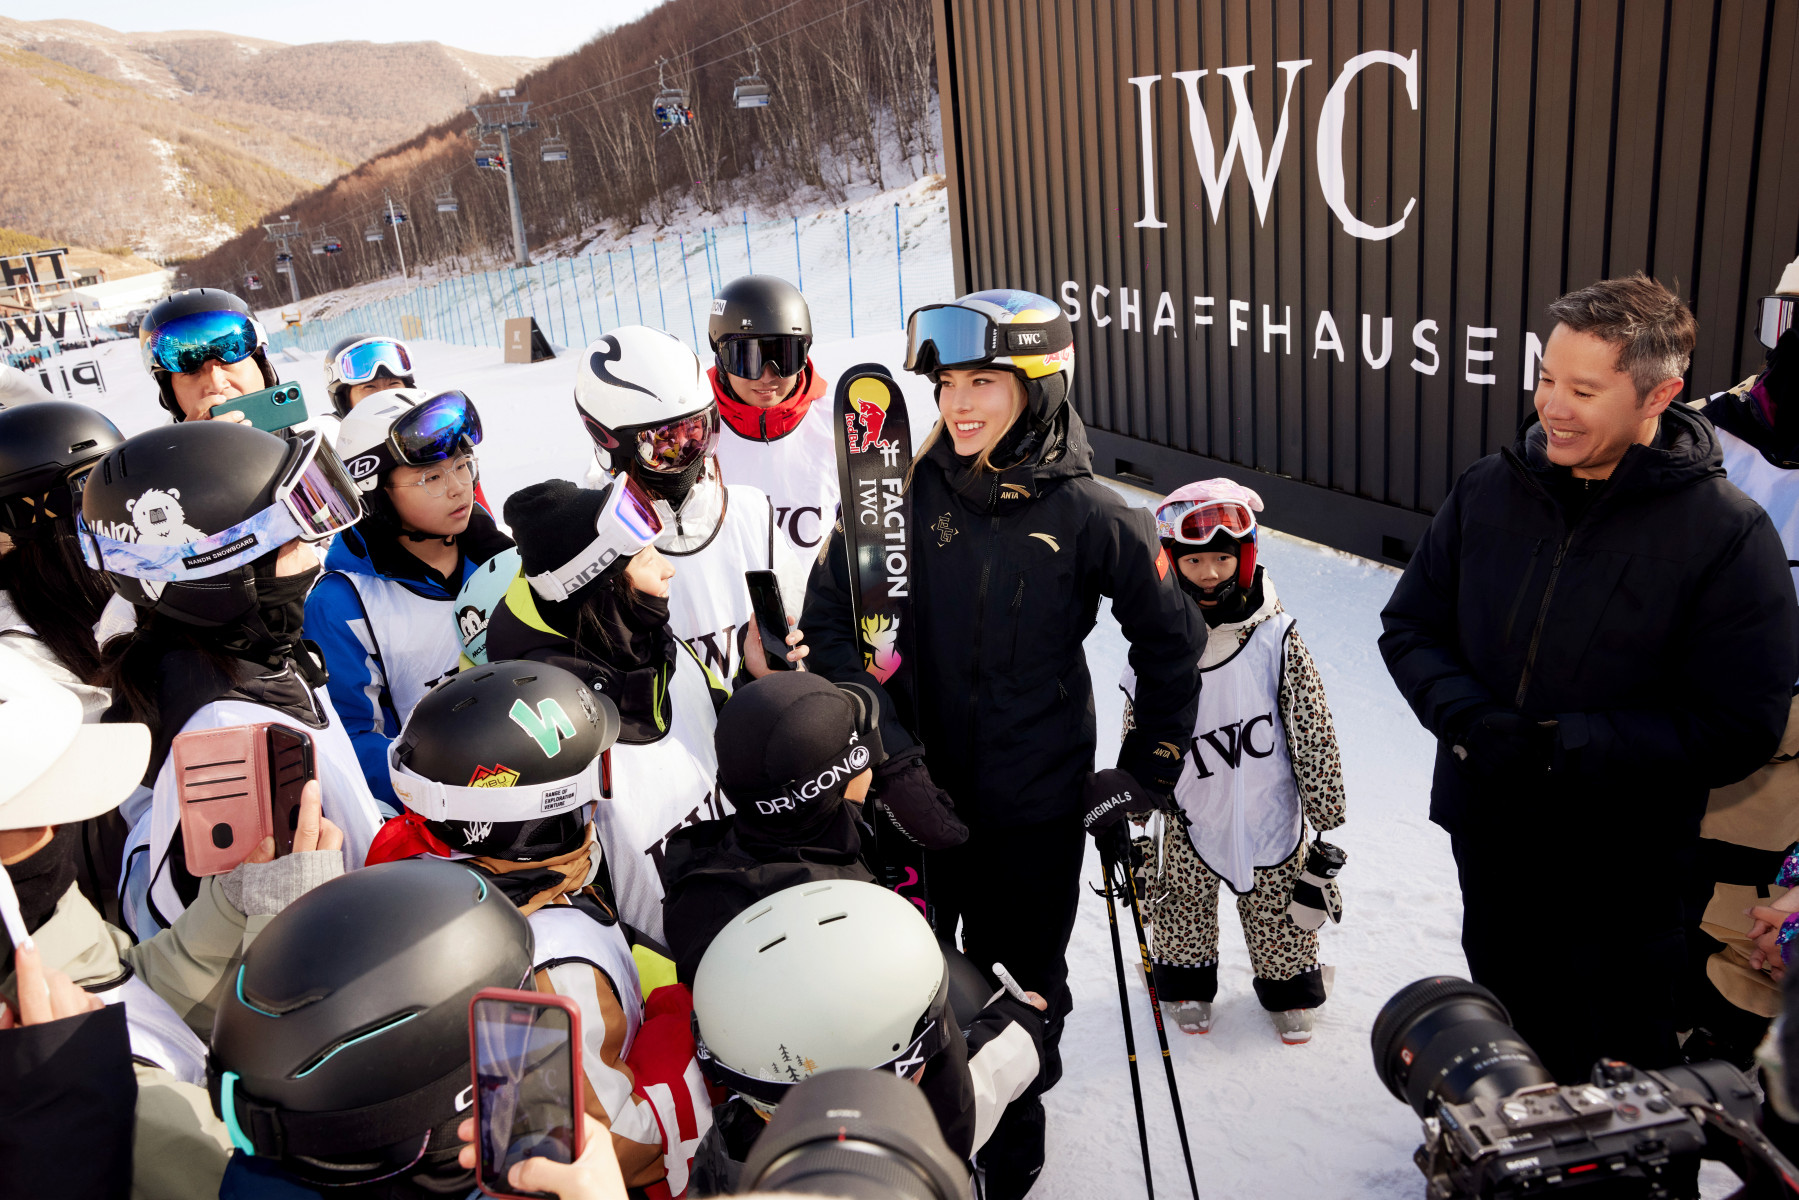 IWC Schaffhausen & Eileen Gu meet on the slopes